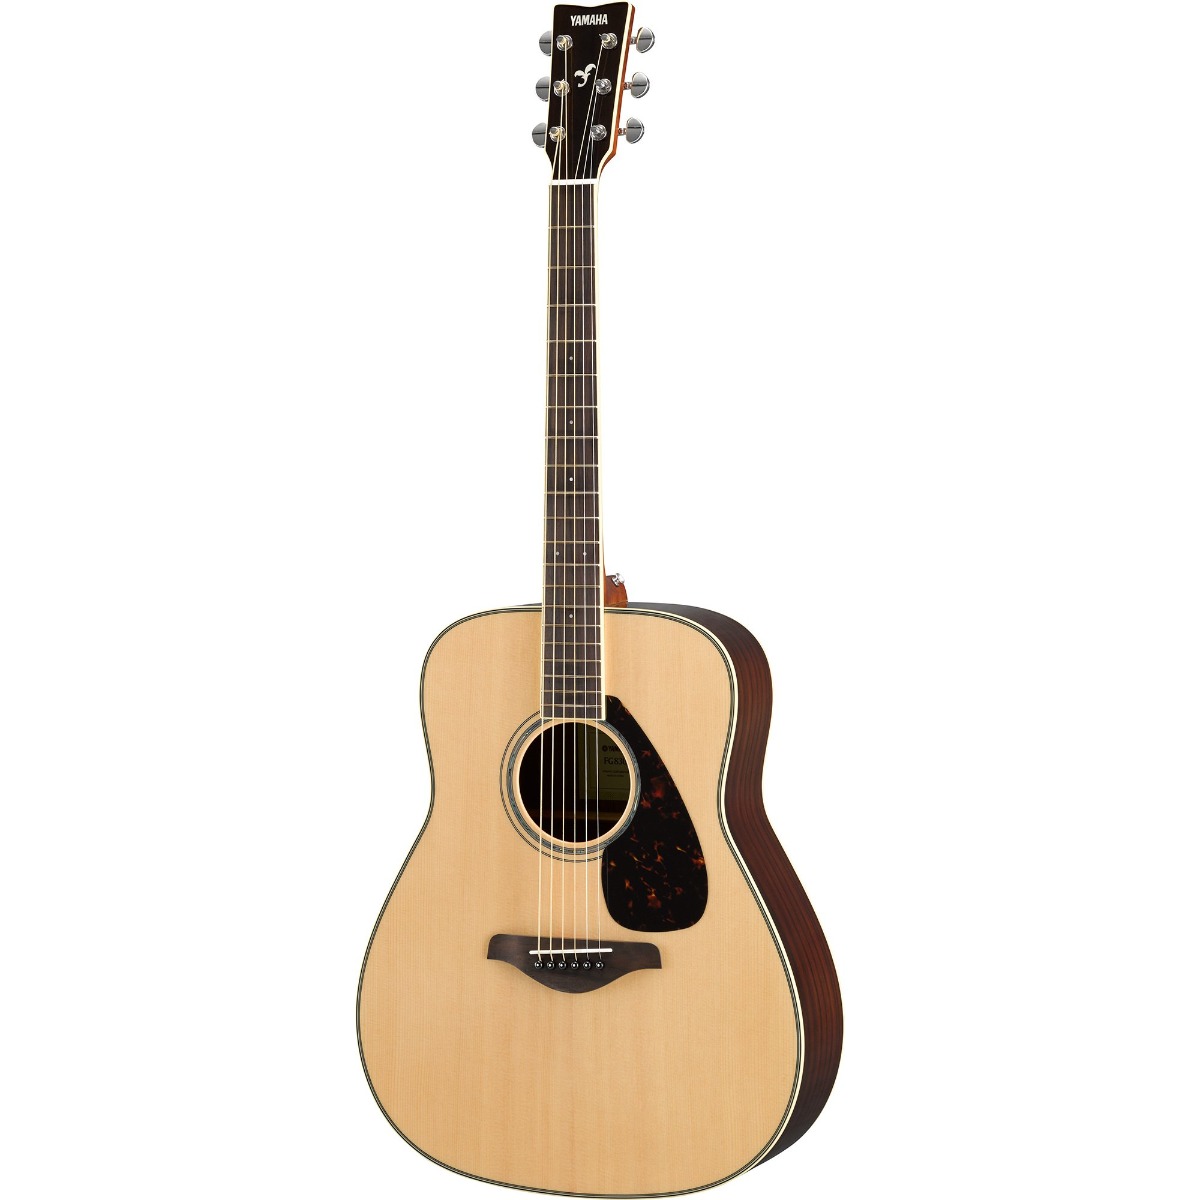 FG830 Acoustic Guitar - Yamaha USA